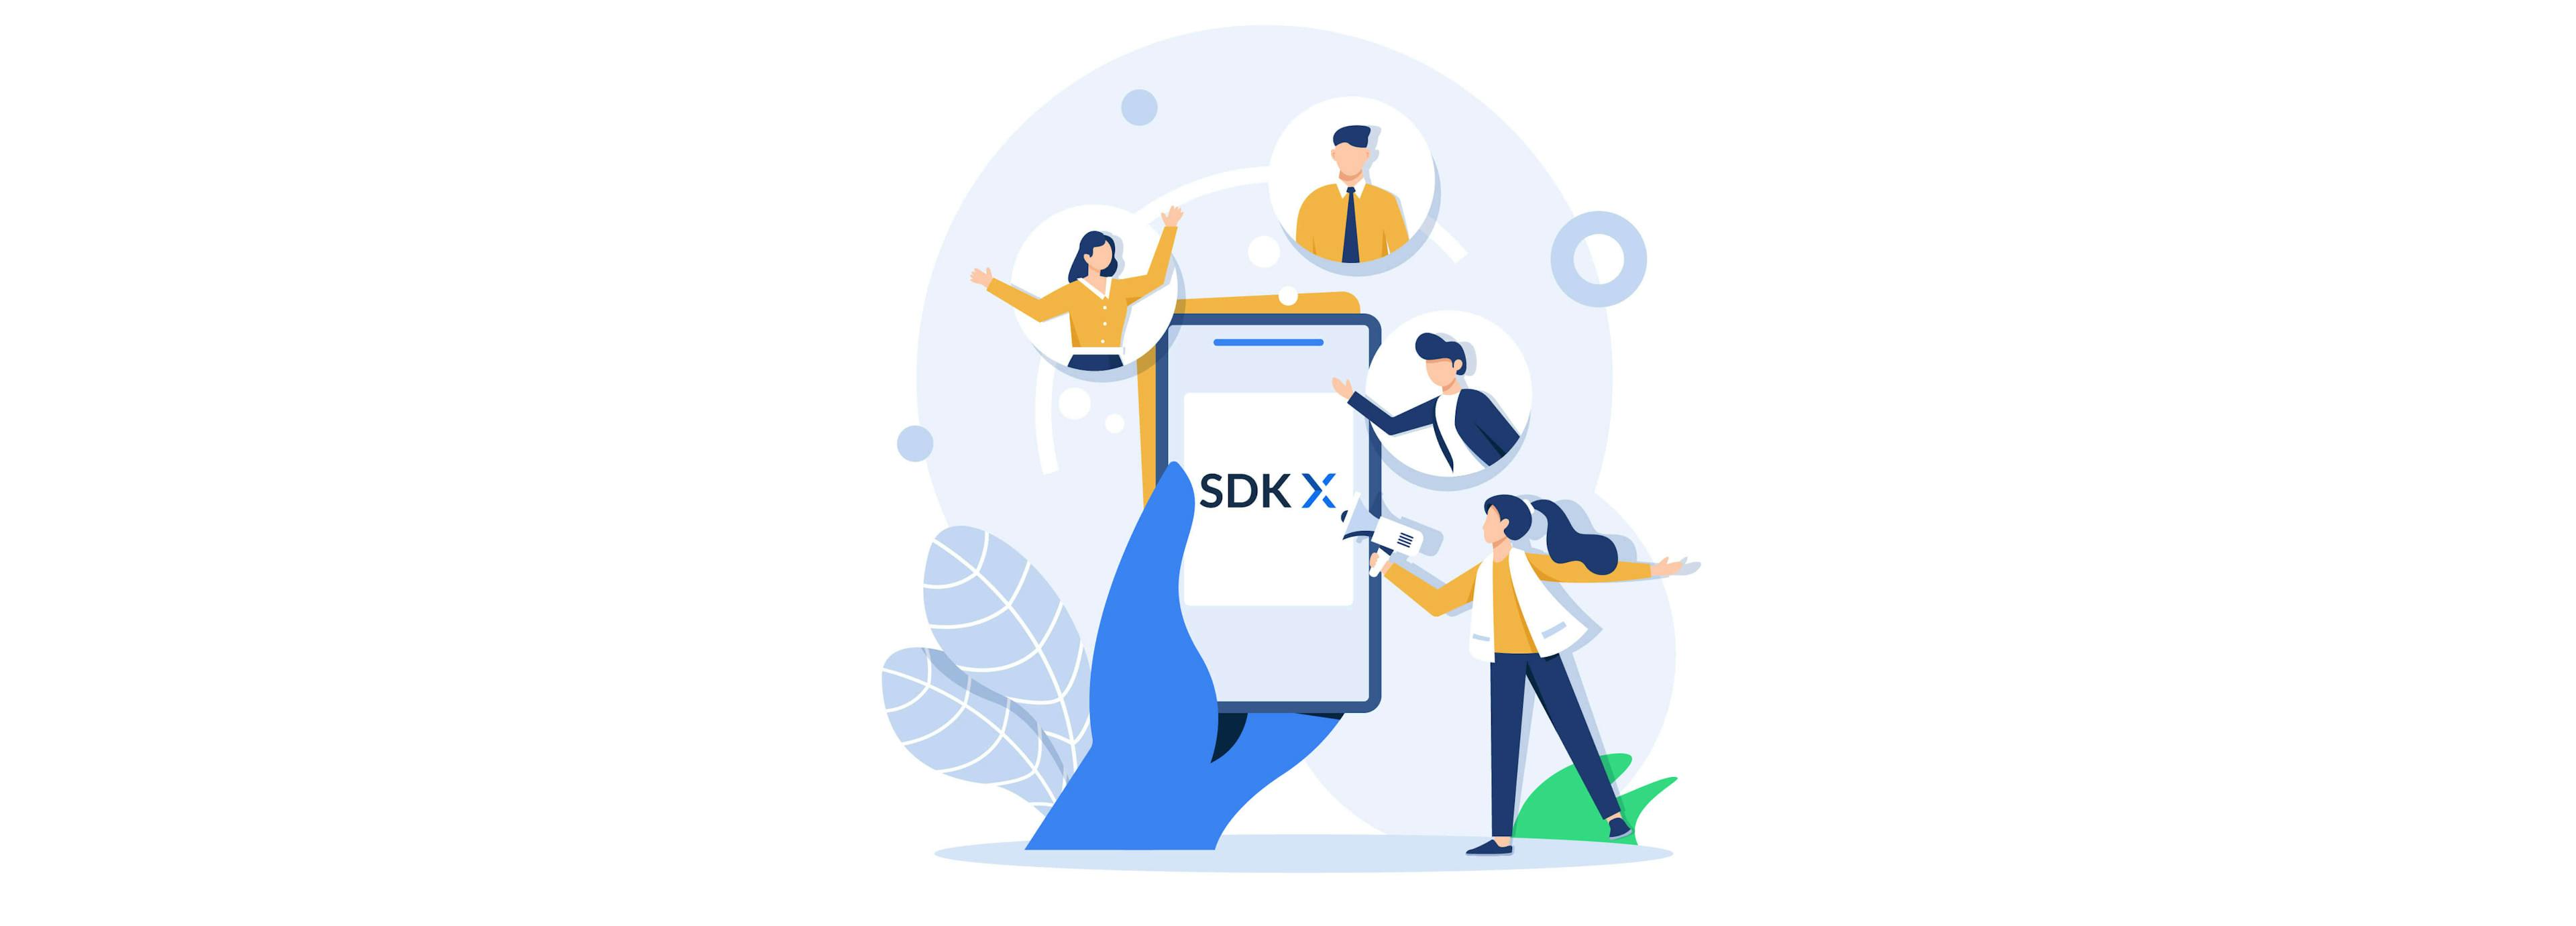 Steps to follow for SDK X integration